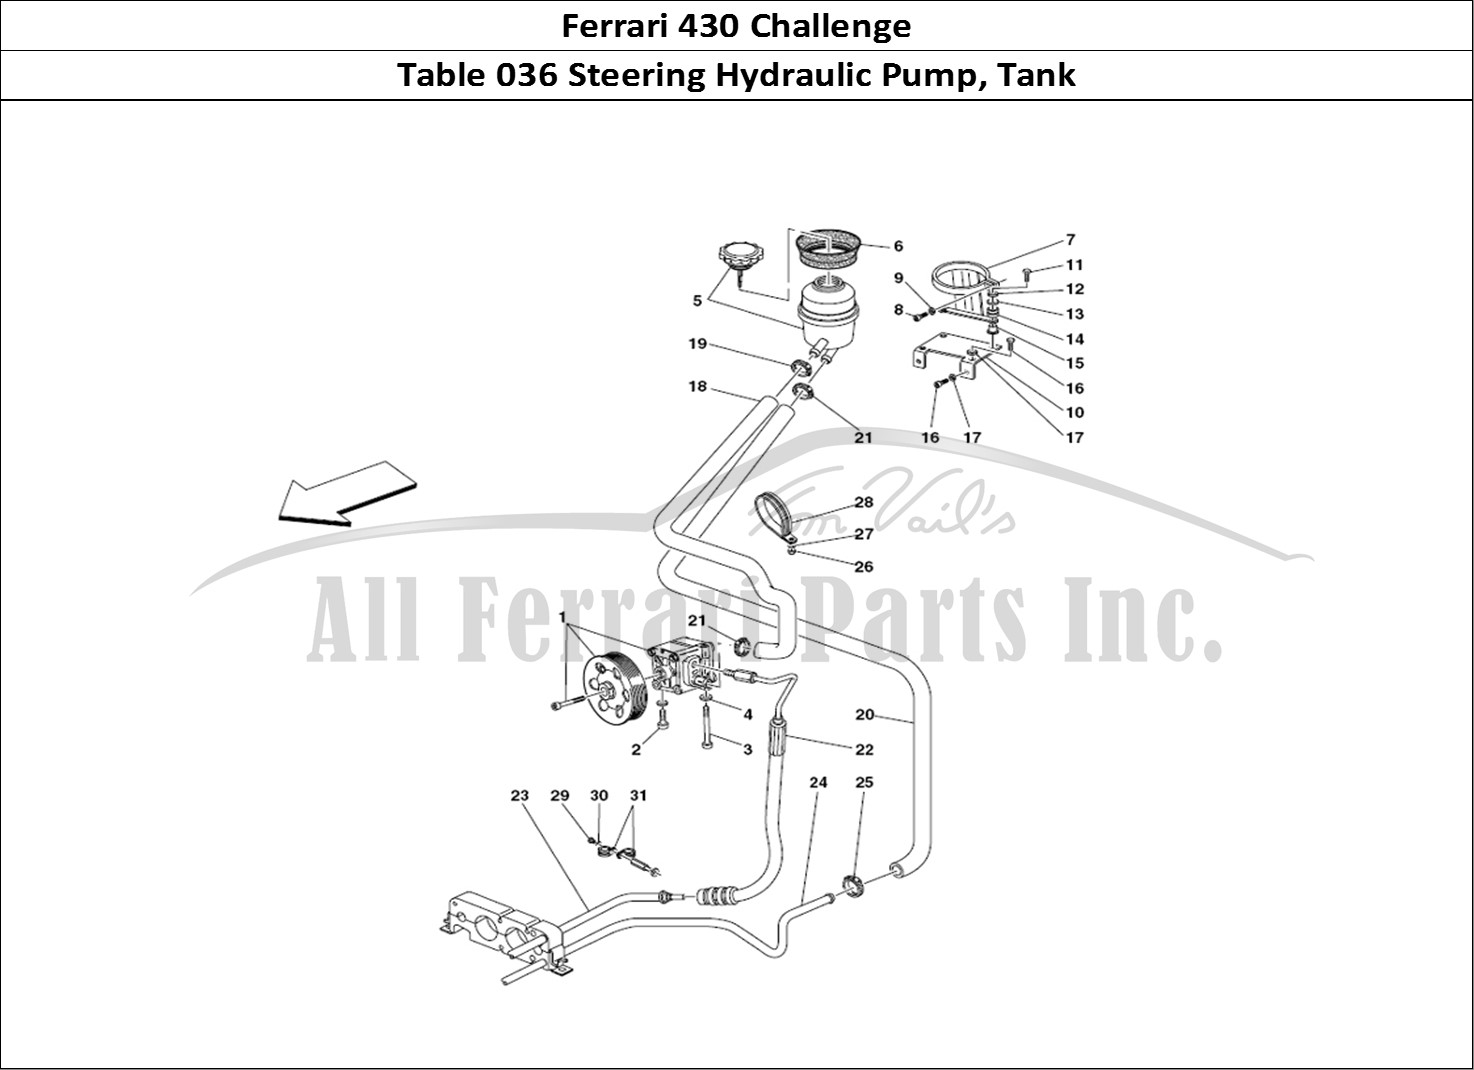 Ferrari Parts Ferrari 430 Challenge (2006) Page 036 Hydraulic Steering Pump a